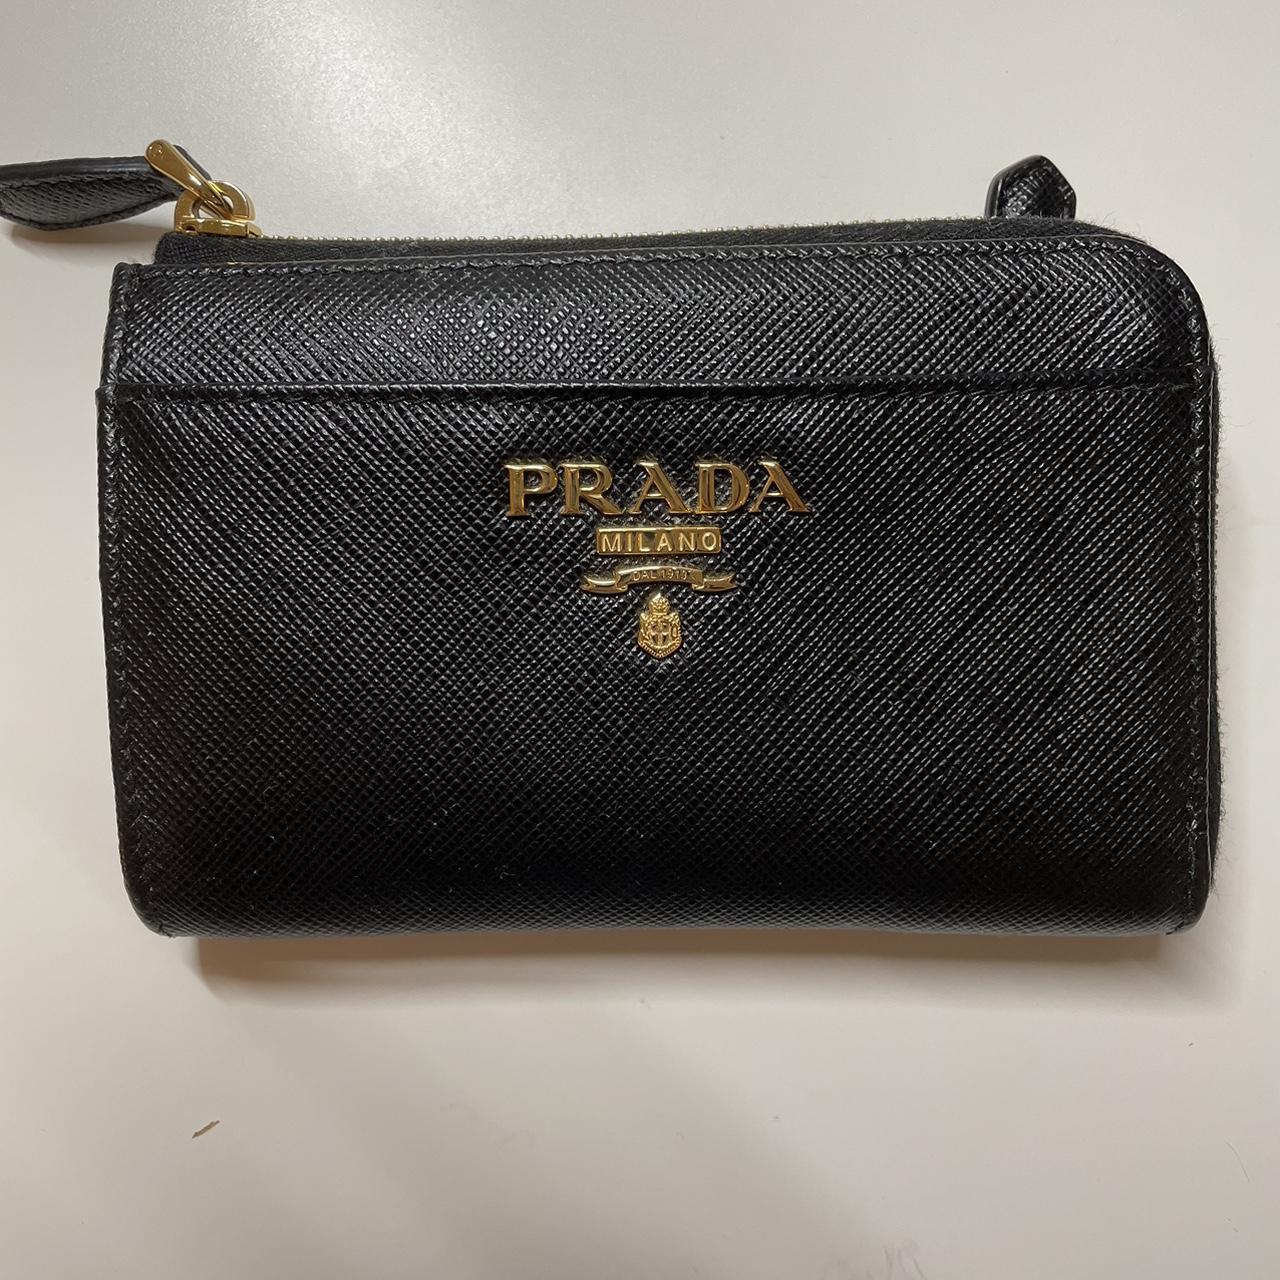 Prada Mini Envelope Bag with Coin Purse | Envelope bag, Mini envelopes, Bags